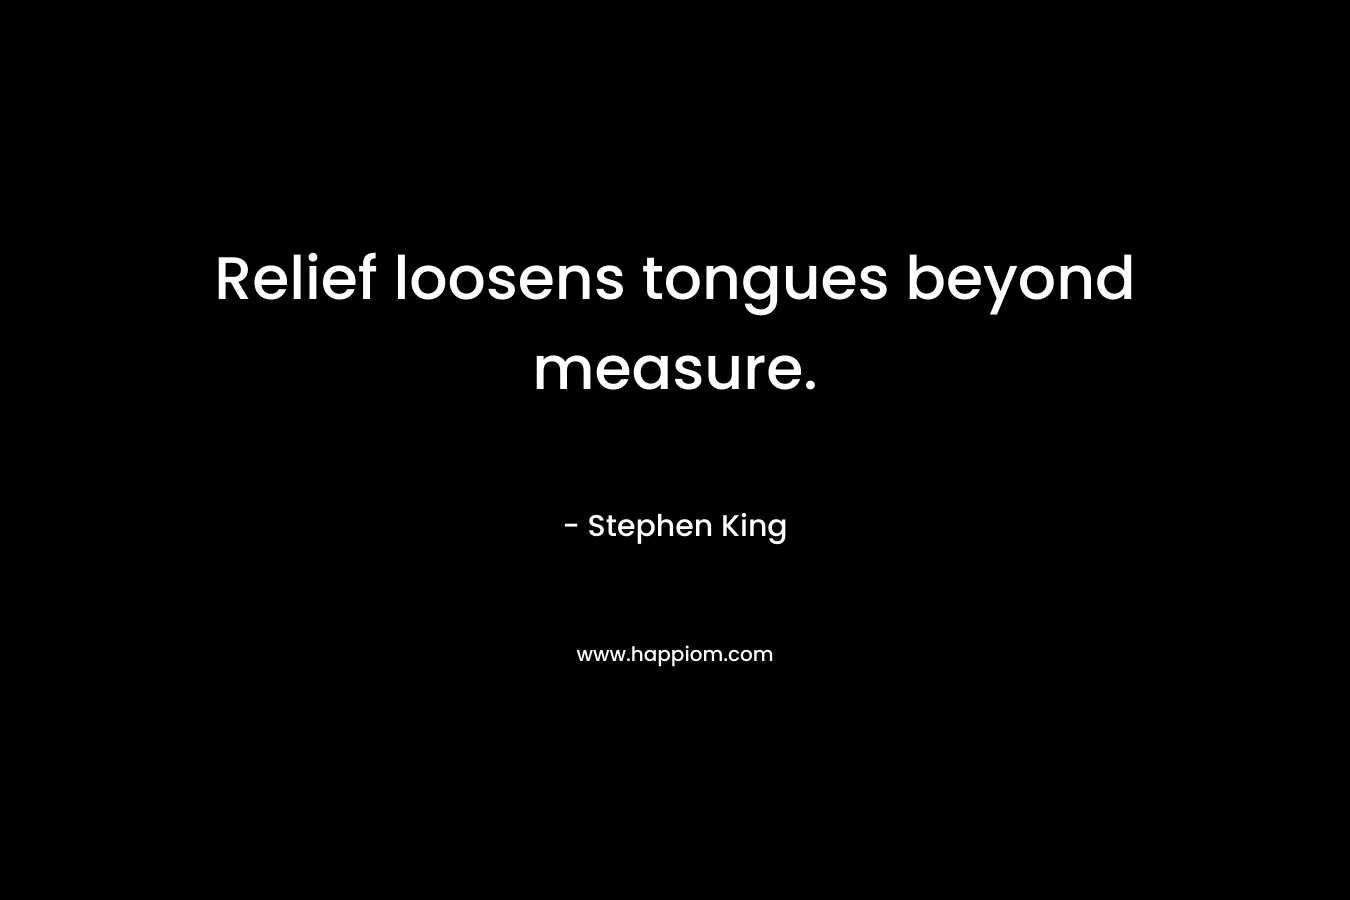 Relief loosens tongues beyond measure.